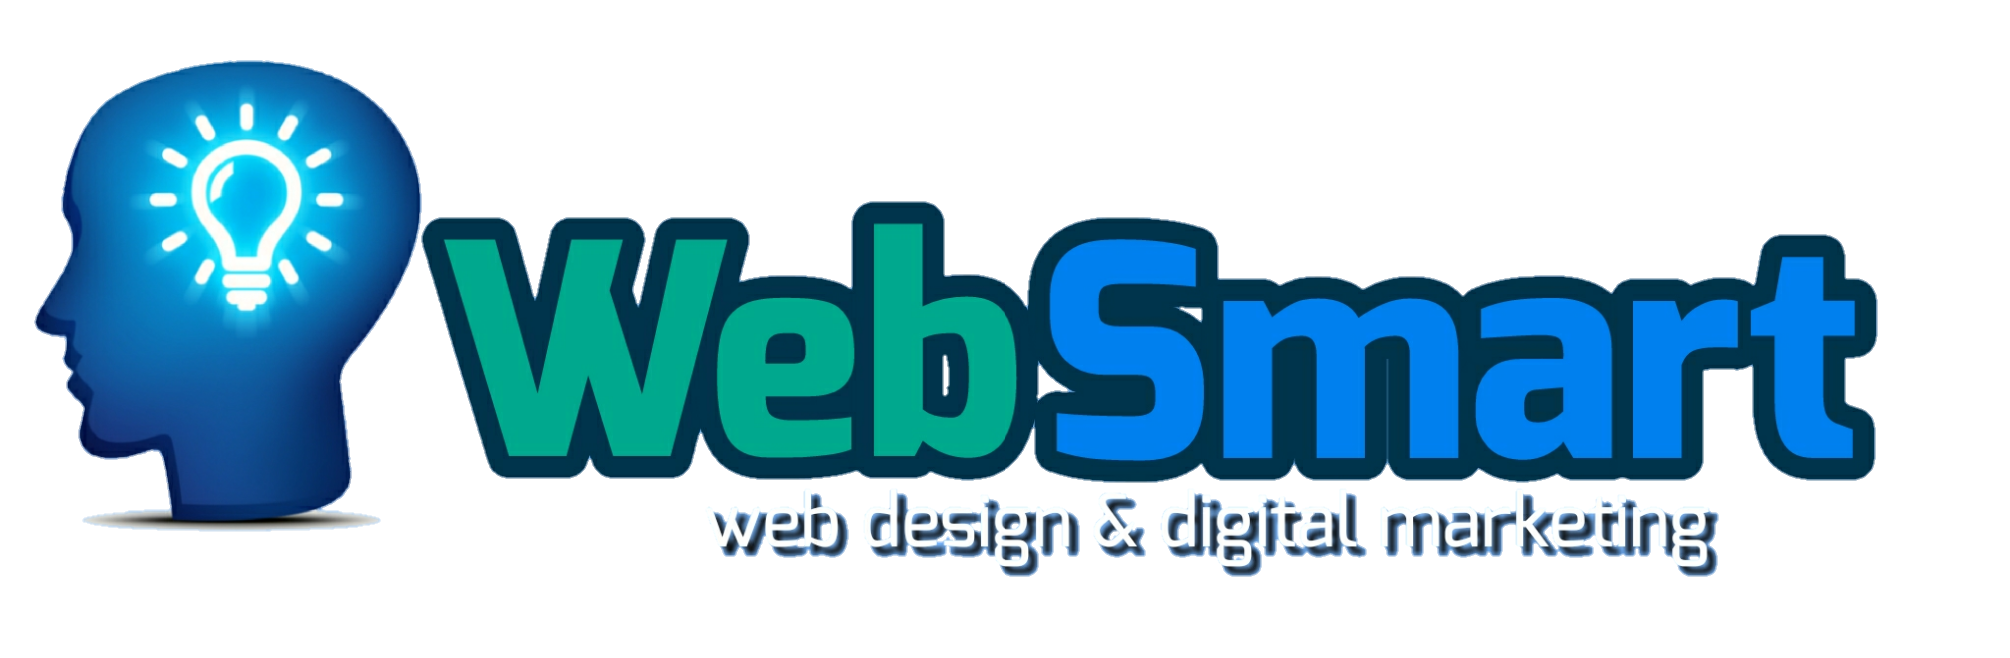 Websmart Web Design & Digital Marketing